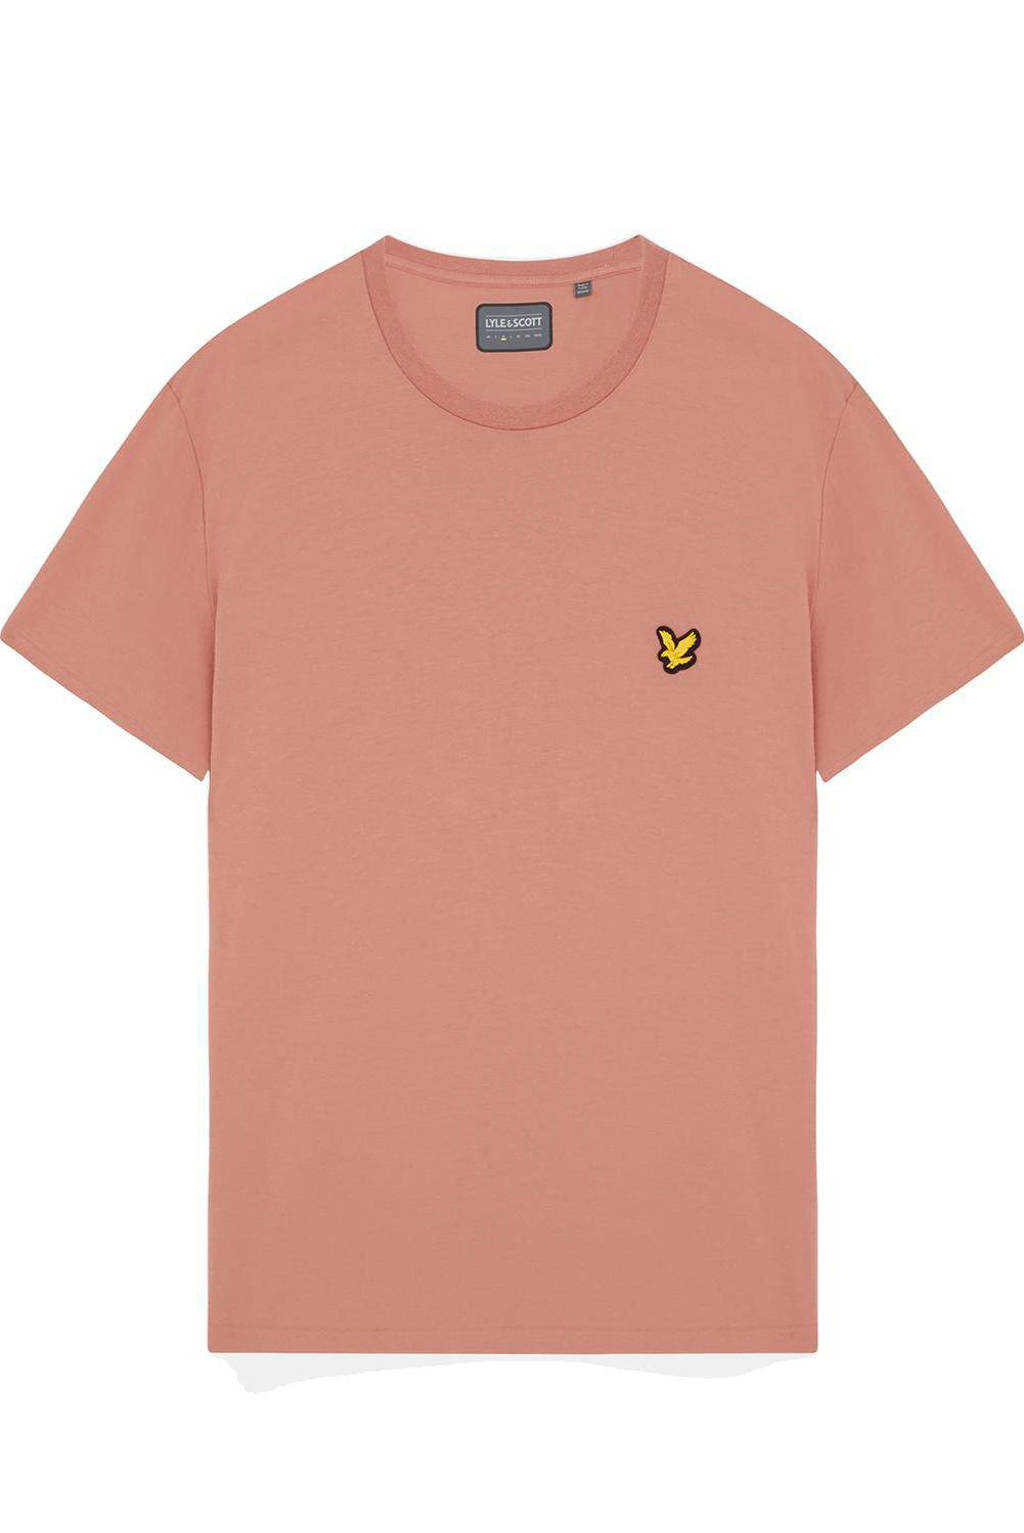 Lyle & Scott T-shirt Martin roze